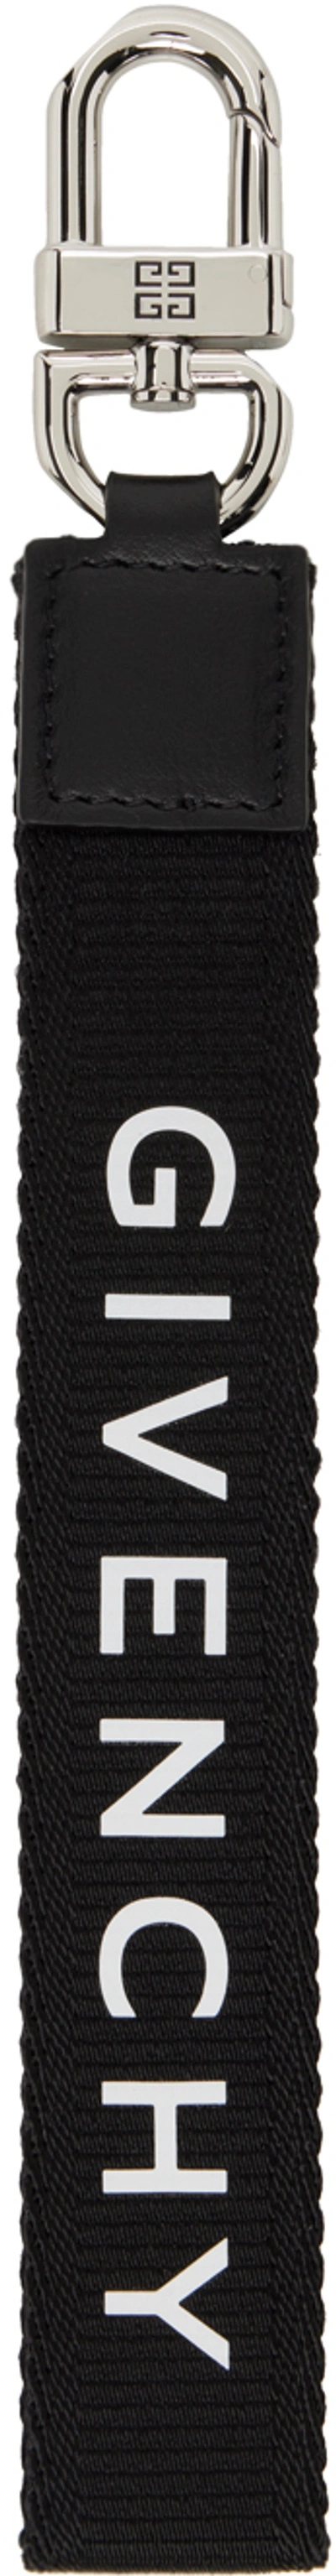 Givenchy Black Wristlet Keychain In 004-black/white